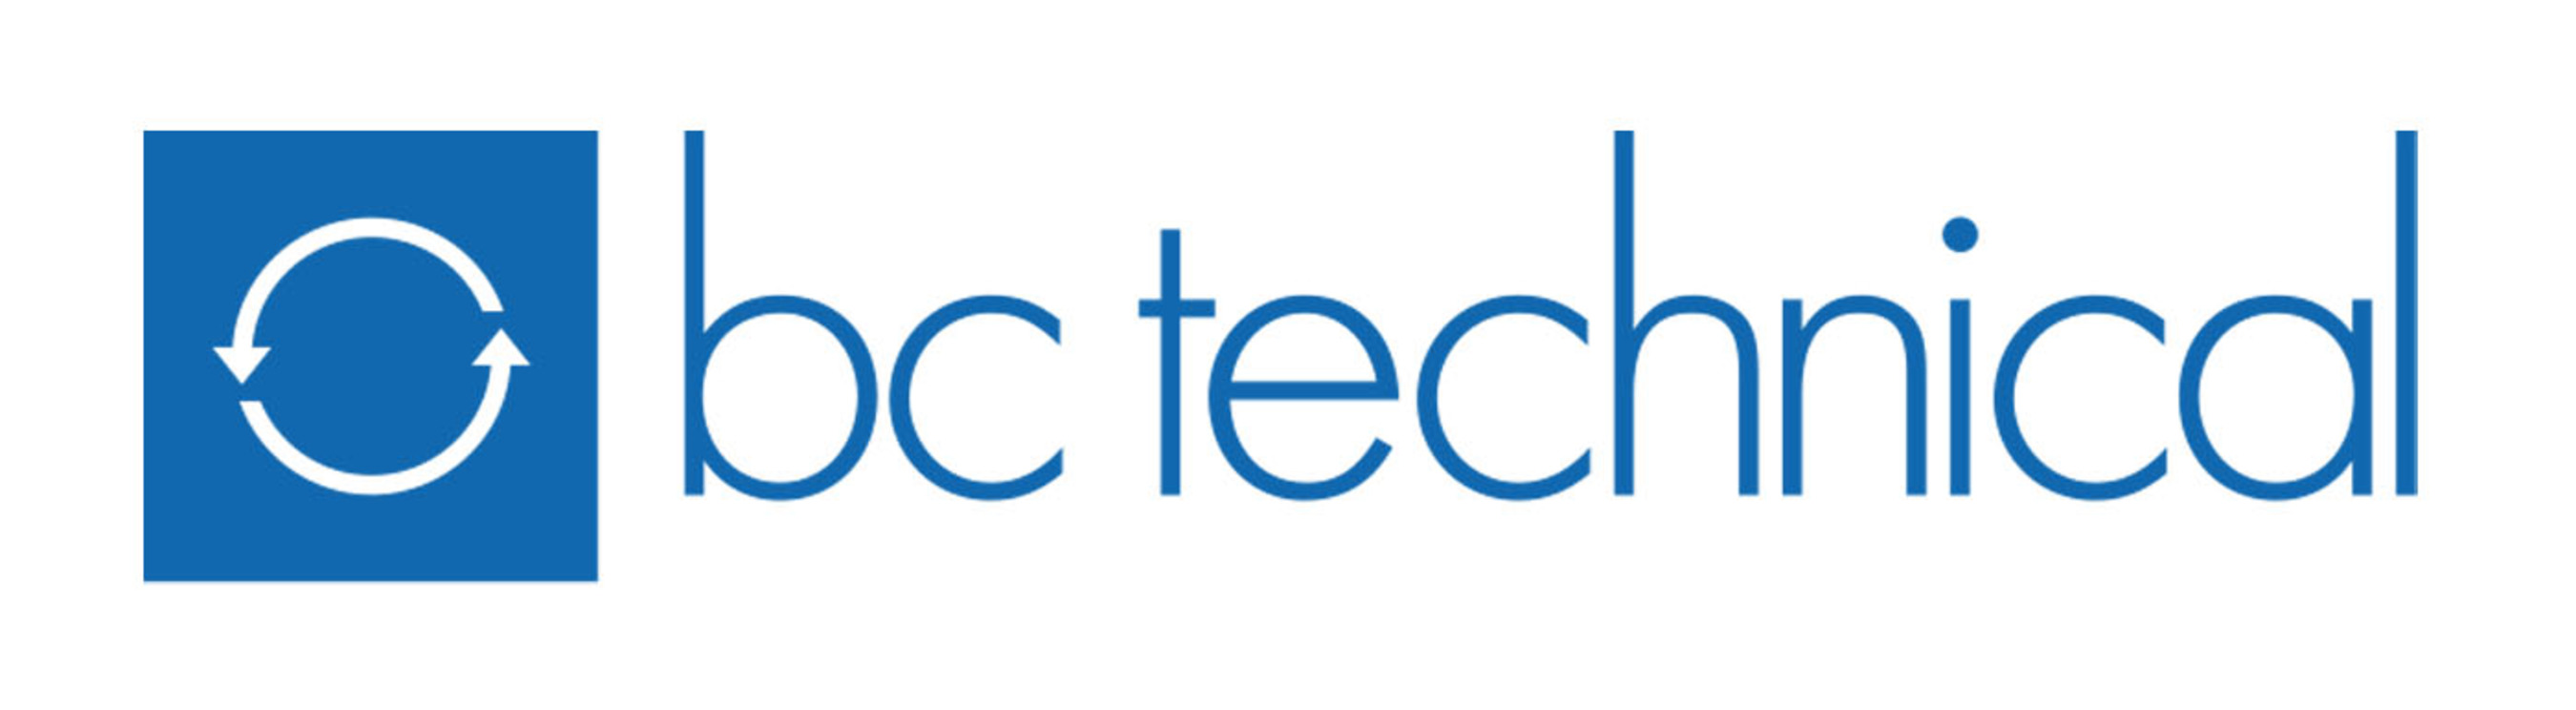 BC Technical logo.